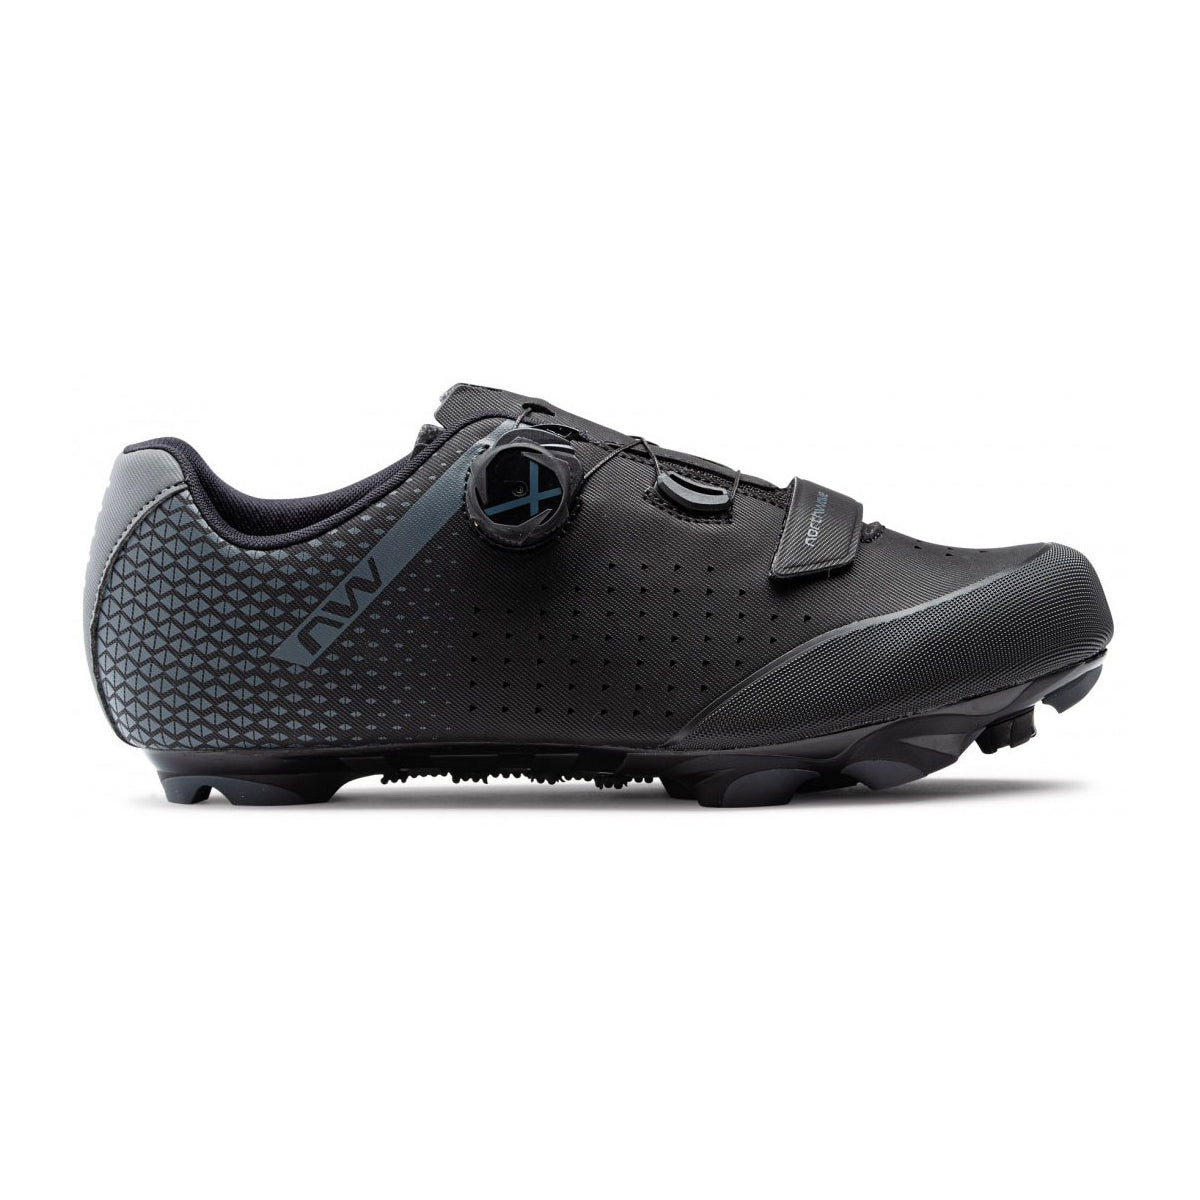 Northwave Origin Plus 2 Wide Shoes - EU 46 - Black - Anthracite